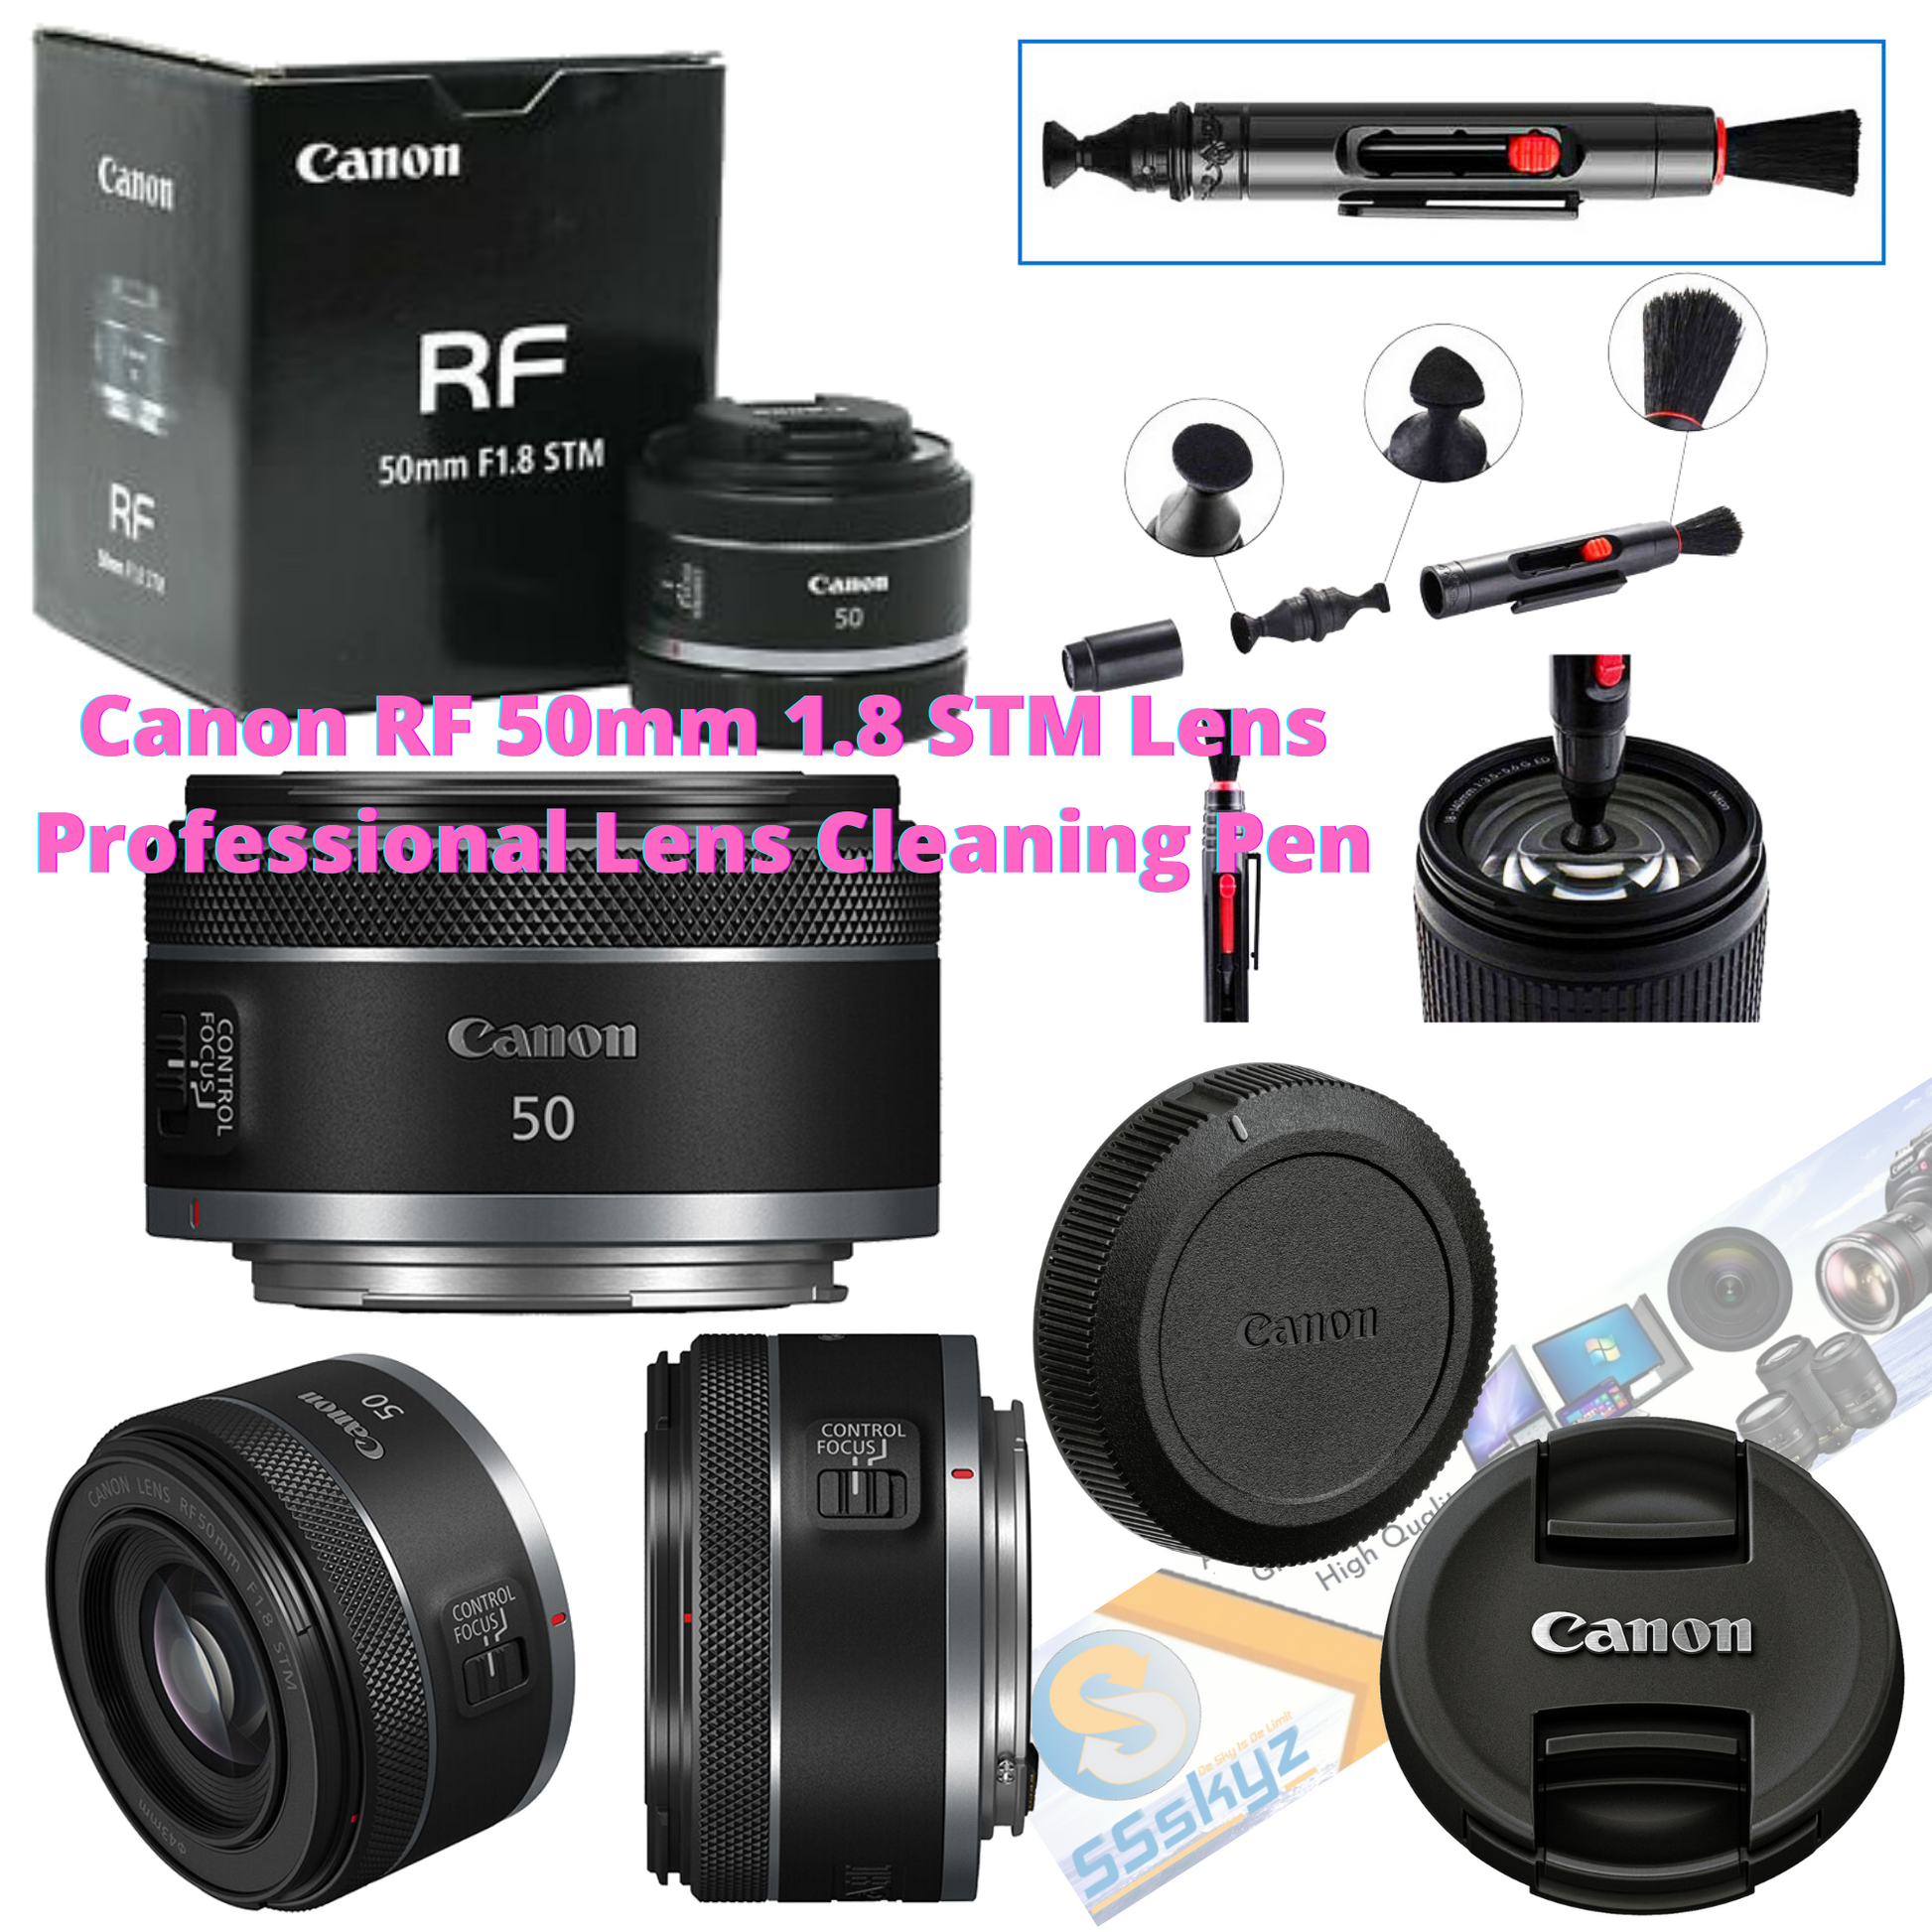 Canon 50mm 1.8 Stm Rf F1.8 Lens Standard Auto Focus F/1.8 Camera